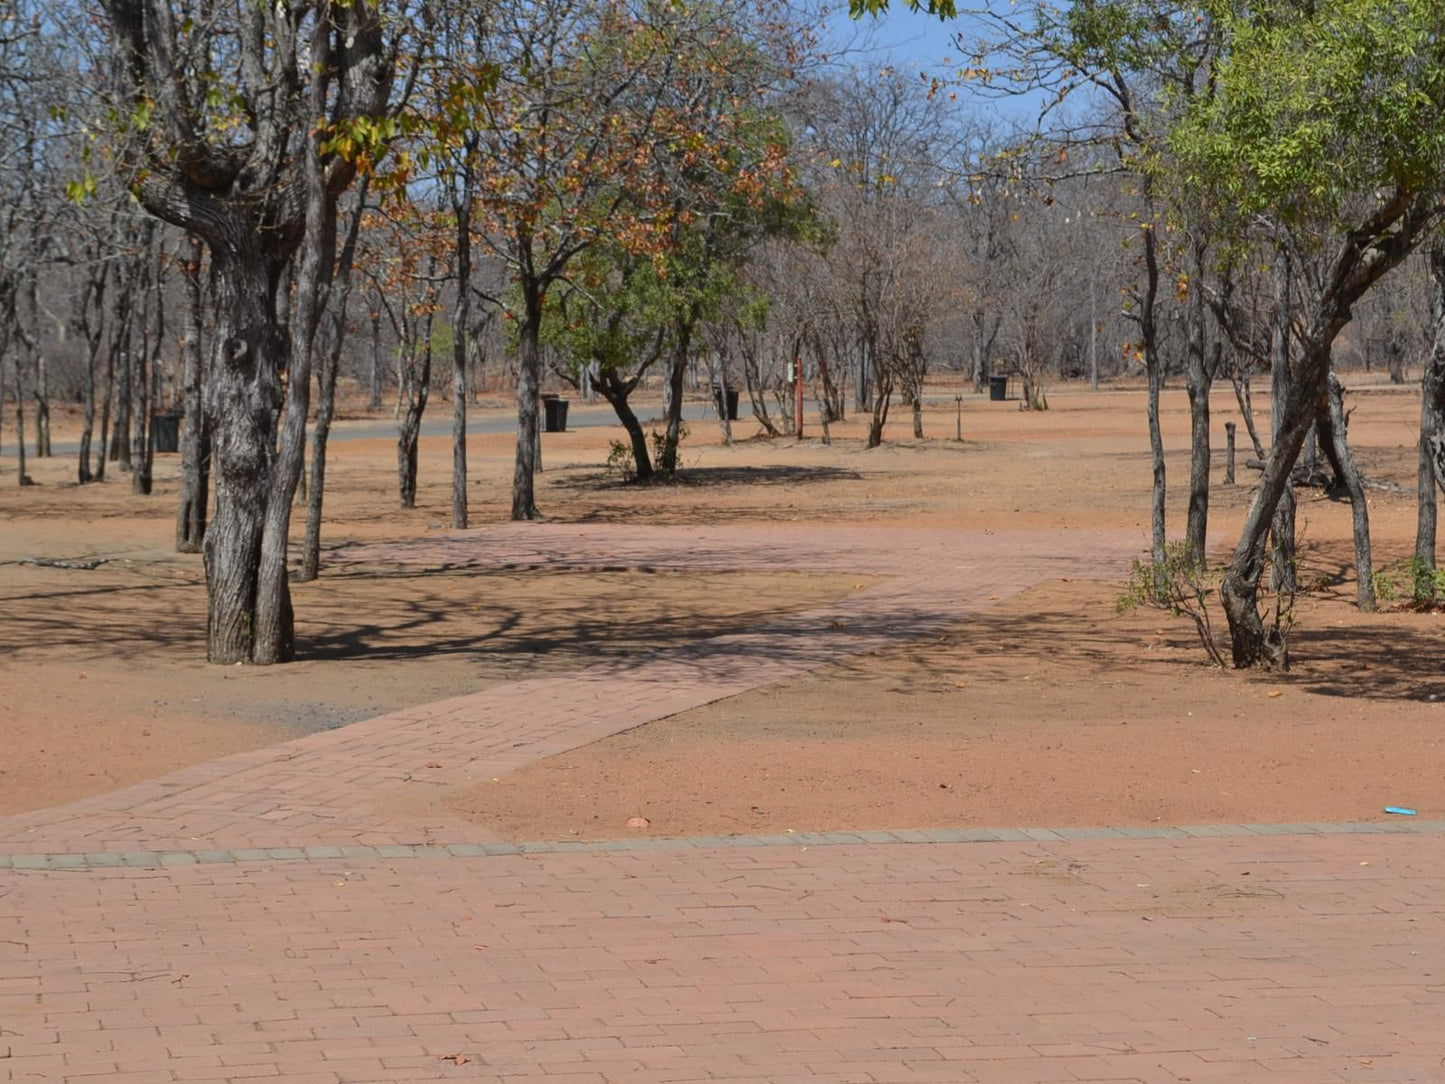 Atkv Eiland Spa Letsitele Limpopo Province South Africa Tree, Plant, Nature, Wood, Lowland